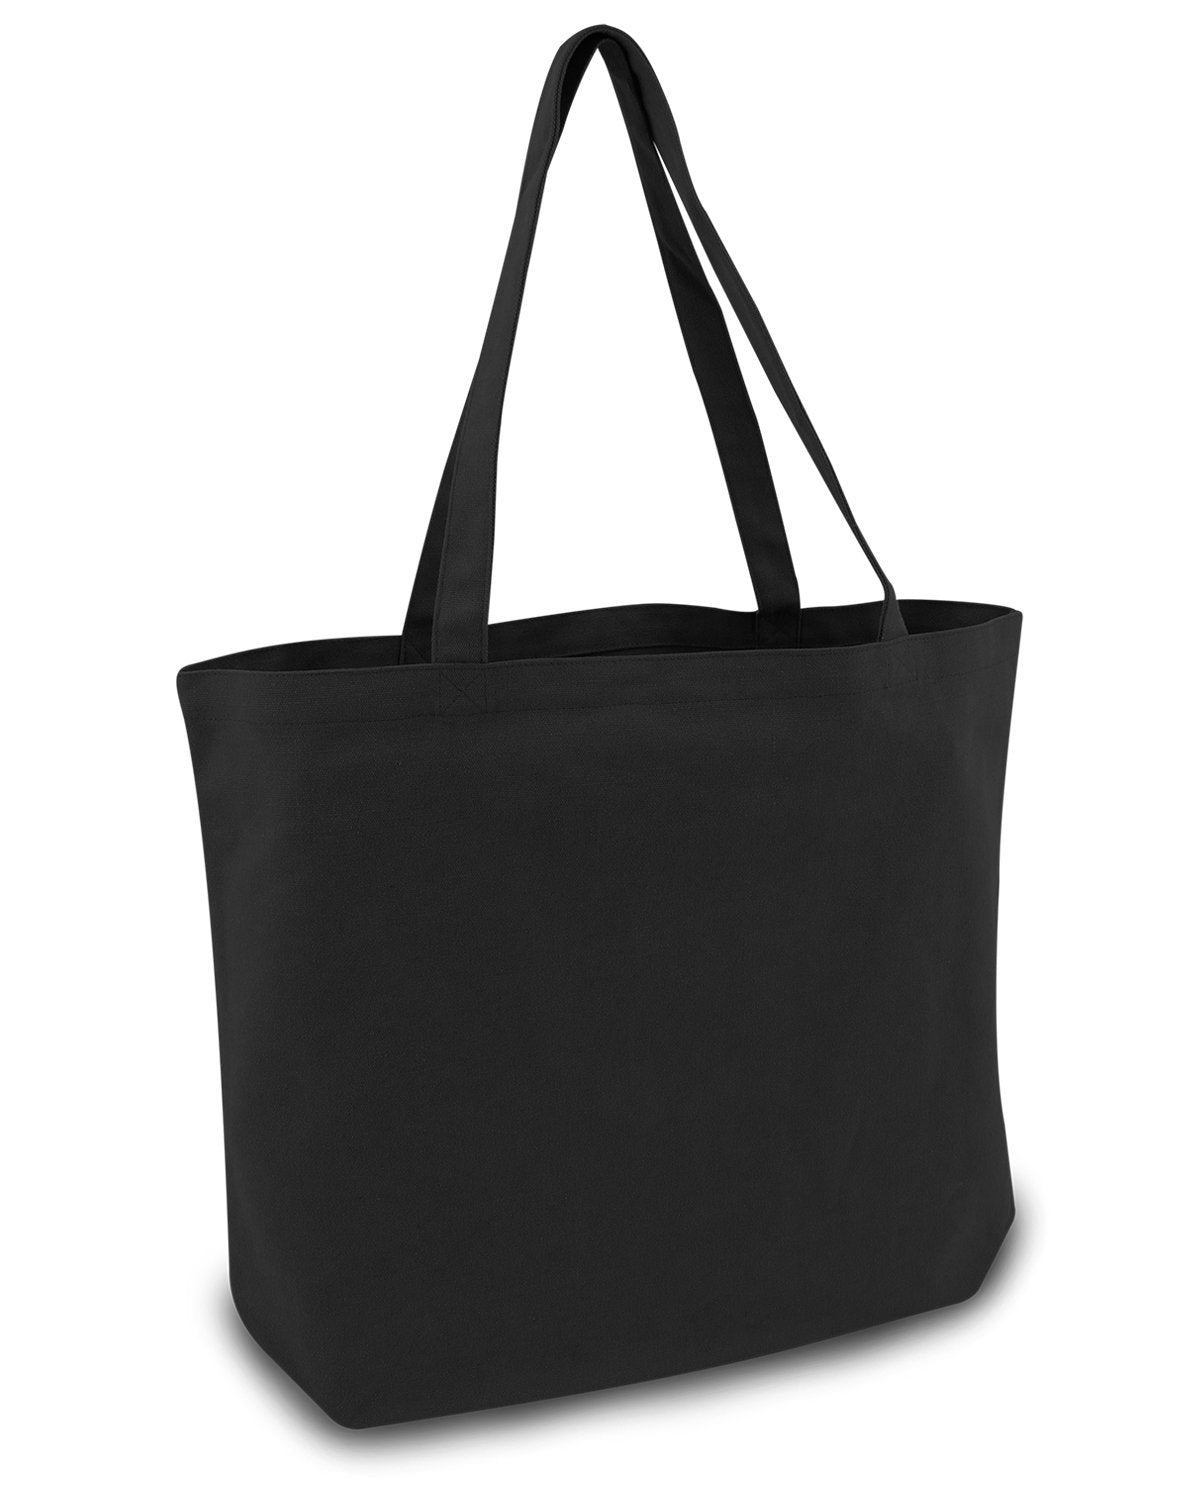 LB8507-Liberty Bags-WASHED BLACK